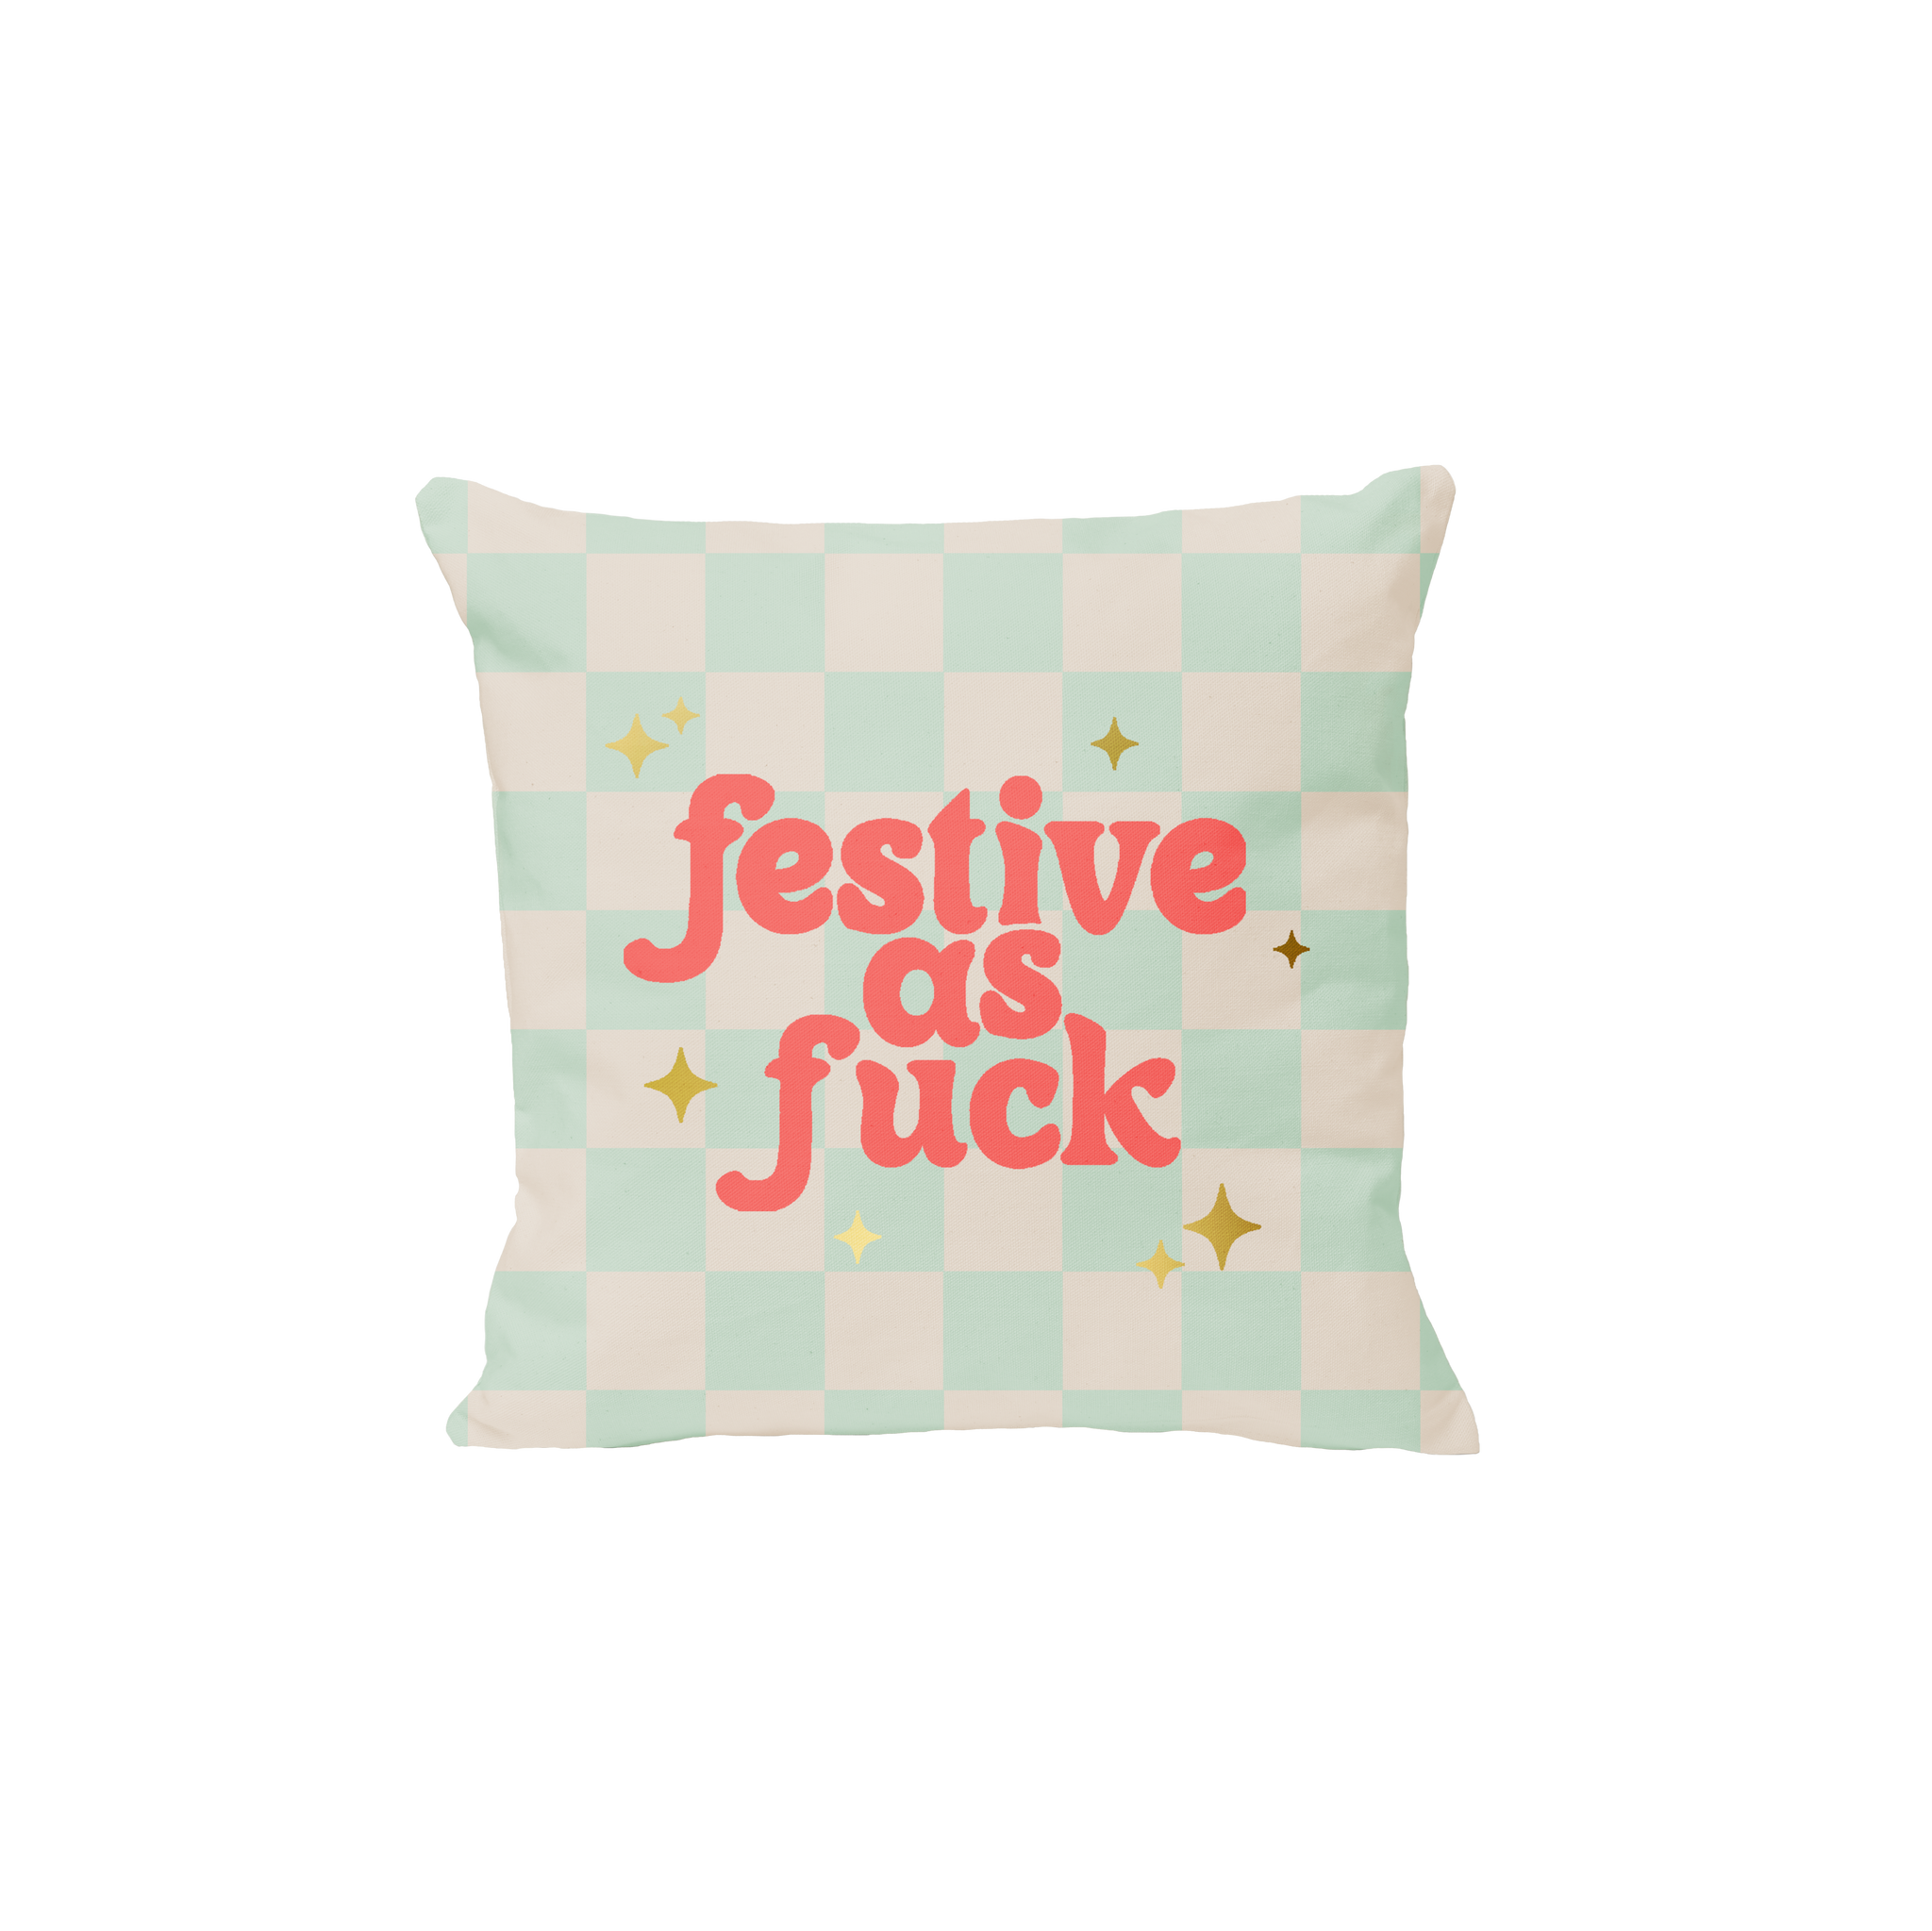 Festive AF Holiday Pillow